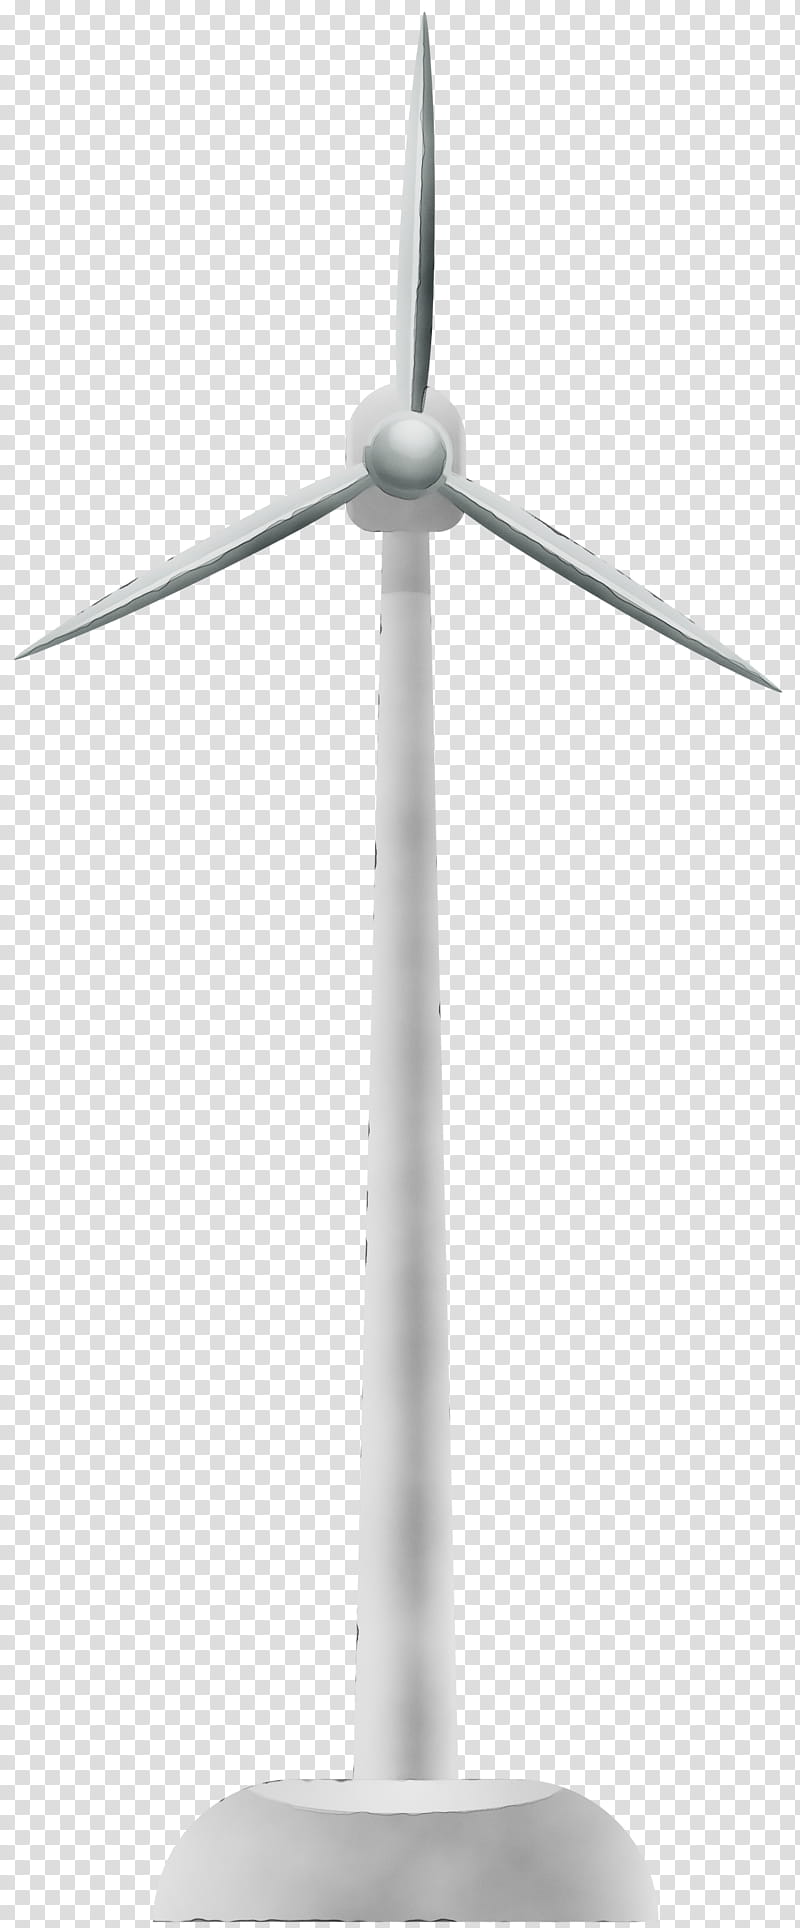 Street Light, Wind Turbine, Energy, Windmill, Light Fixture transparent background PNG clipart